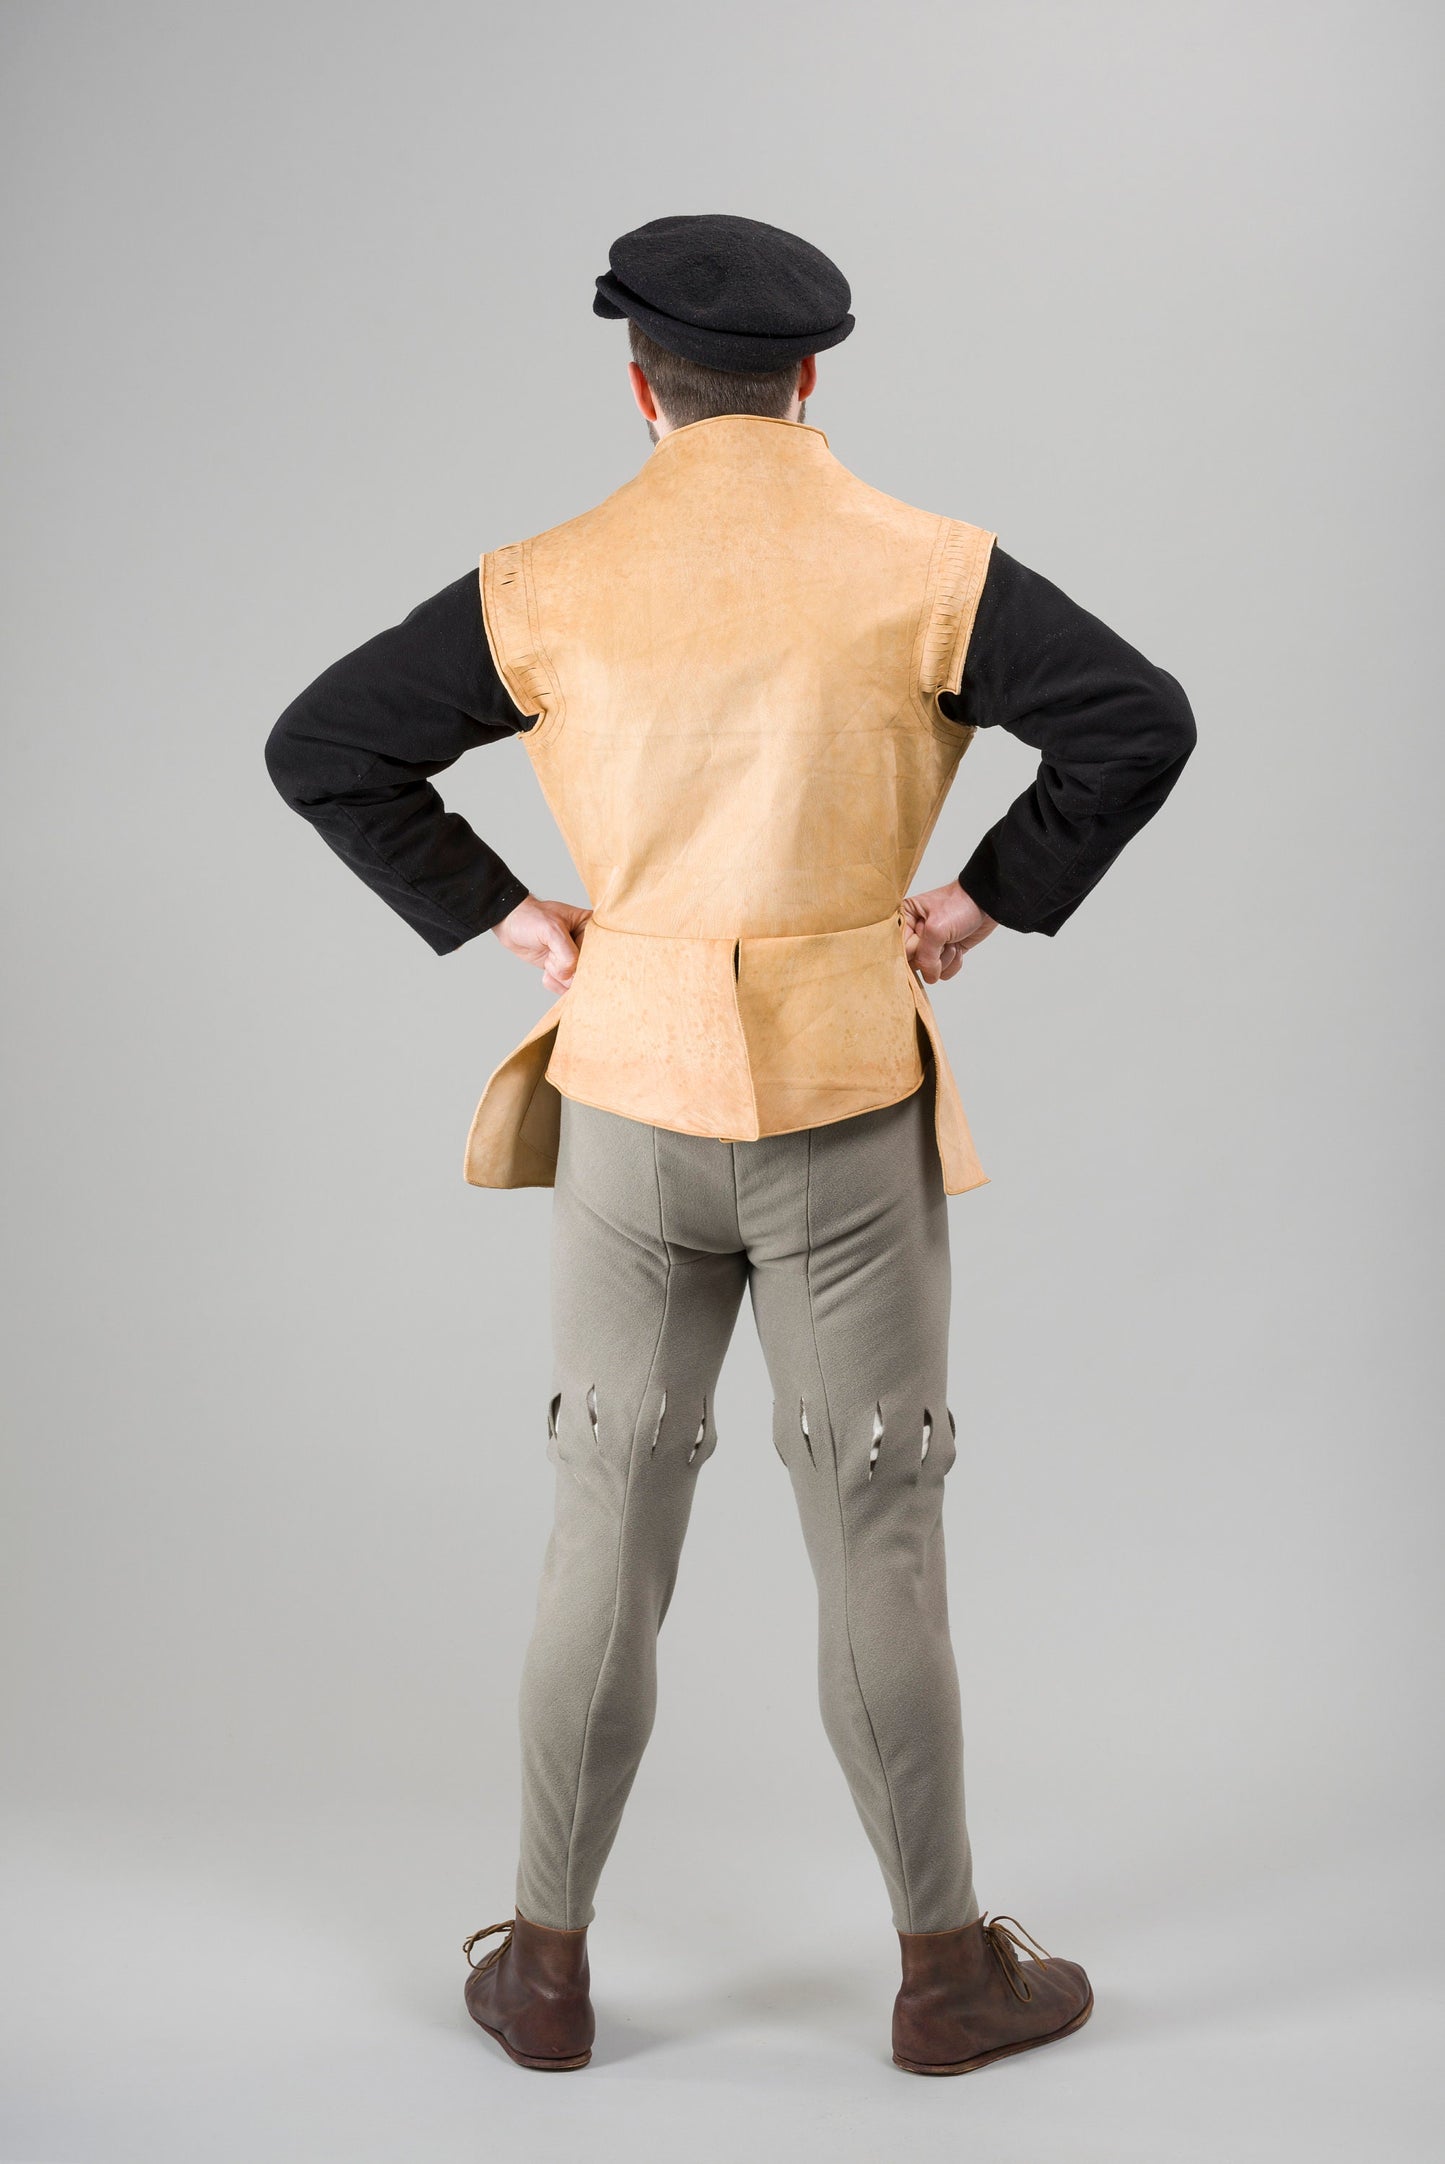 Pattern for Tudor man's leather jerkin, Tudor Tailor exclusive